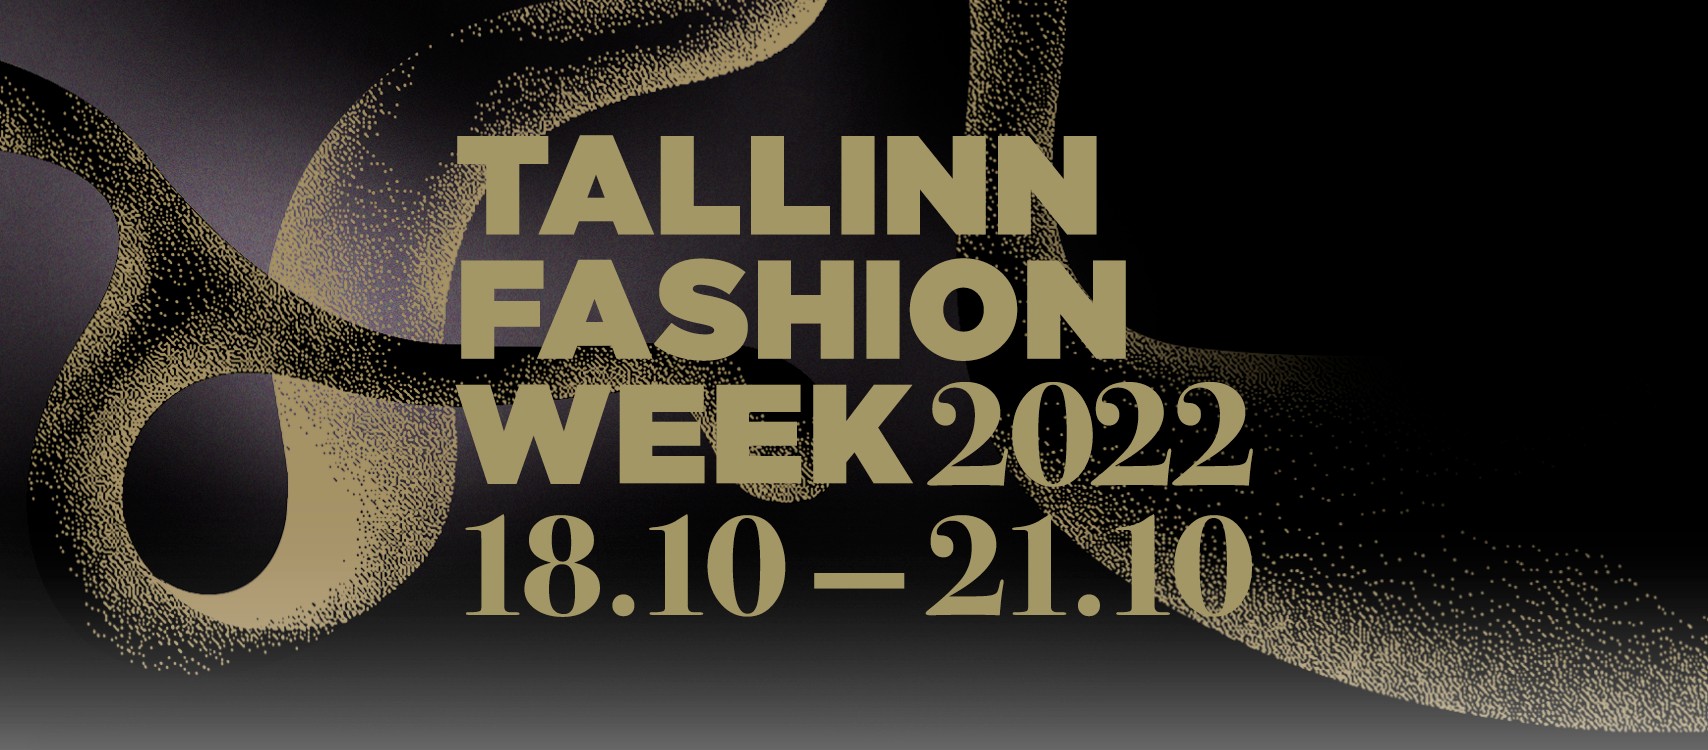 14900Tallinn Fashion Week 2022